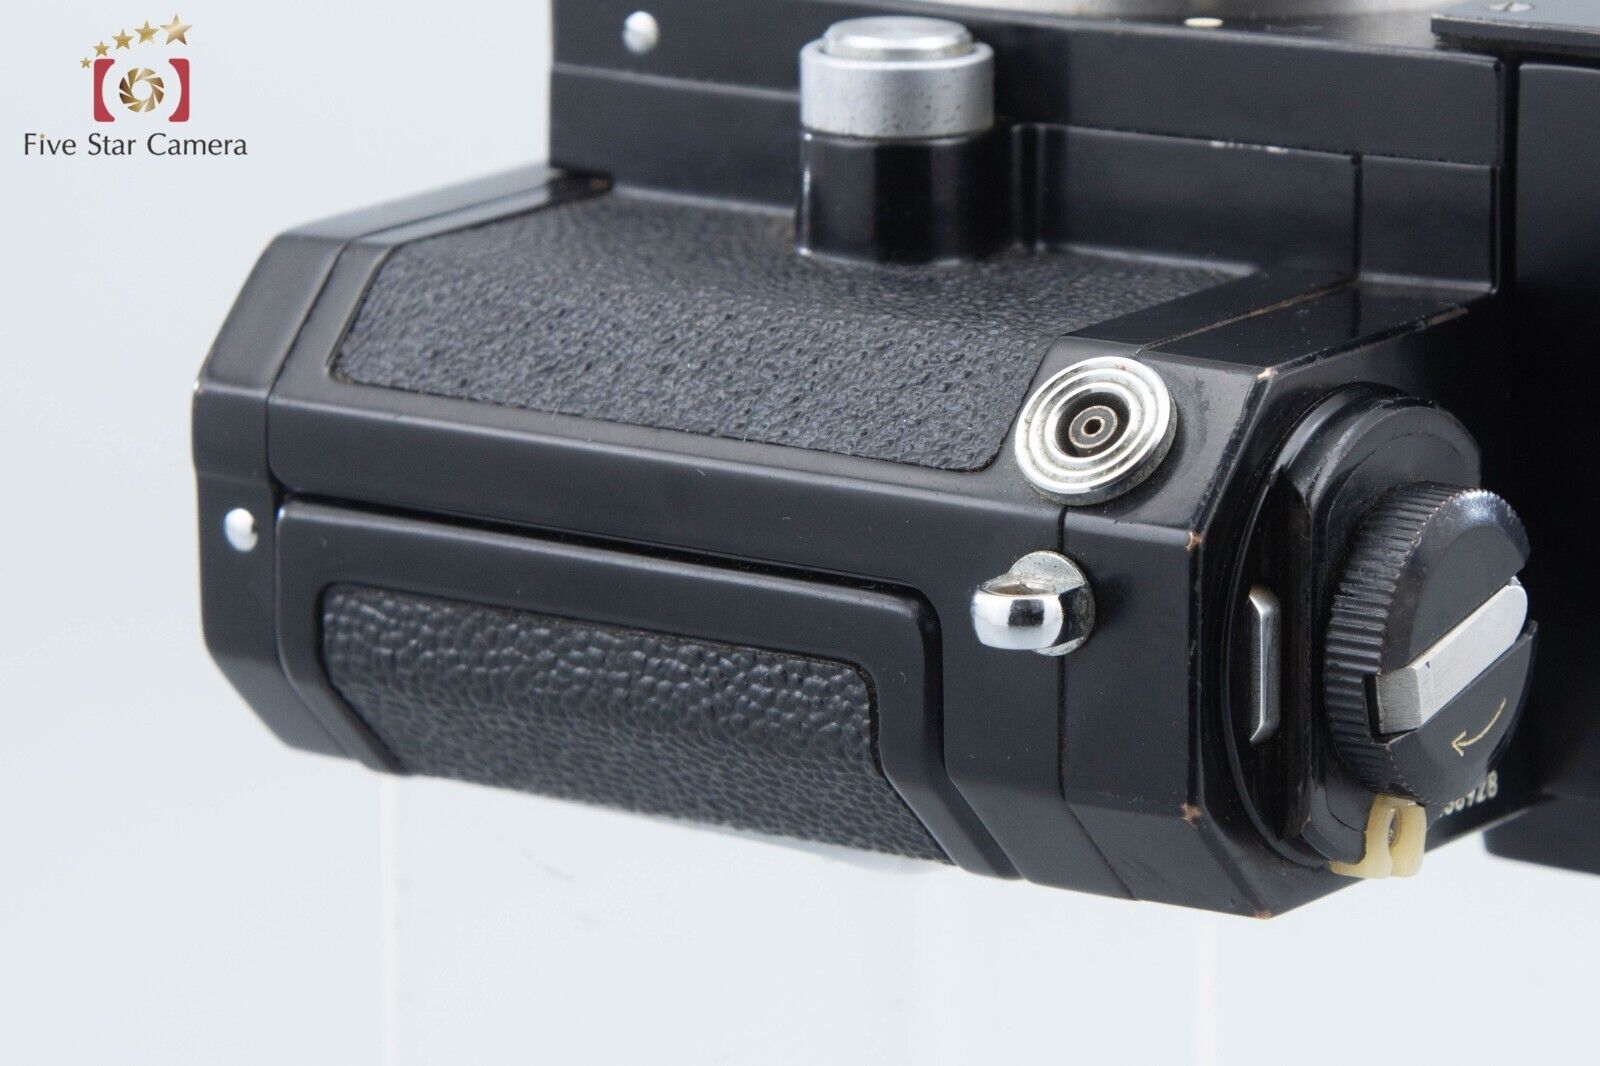 Nikon F Eye Level Black Mid Model 35mm SLR Film Camera Body